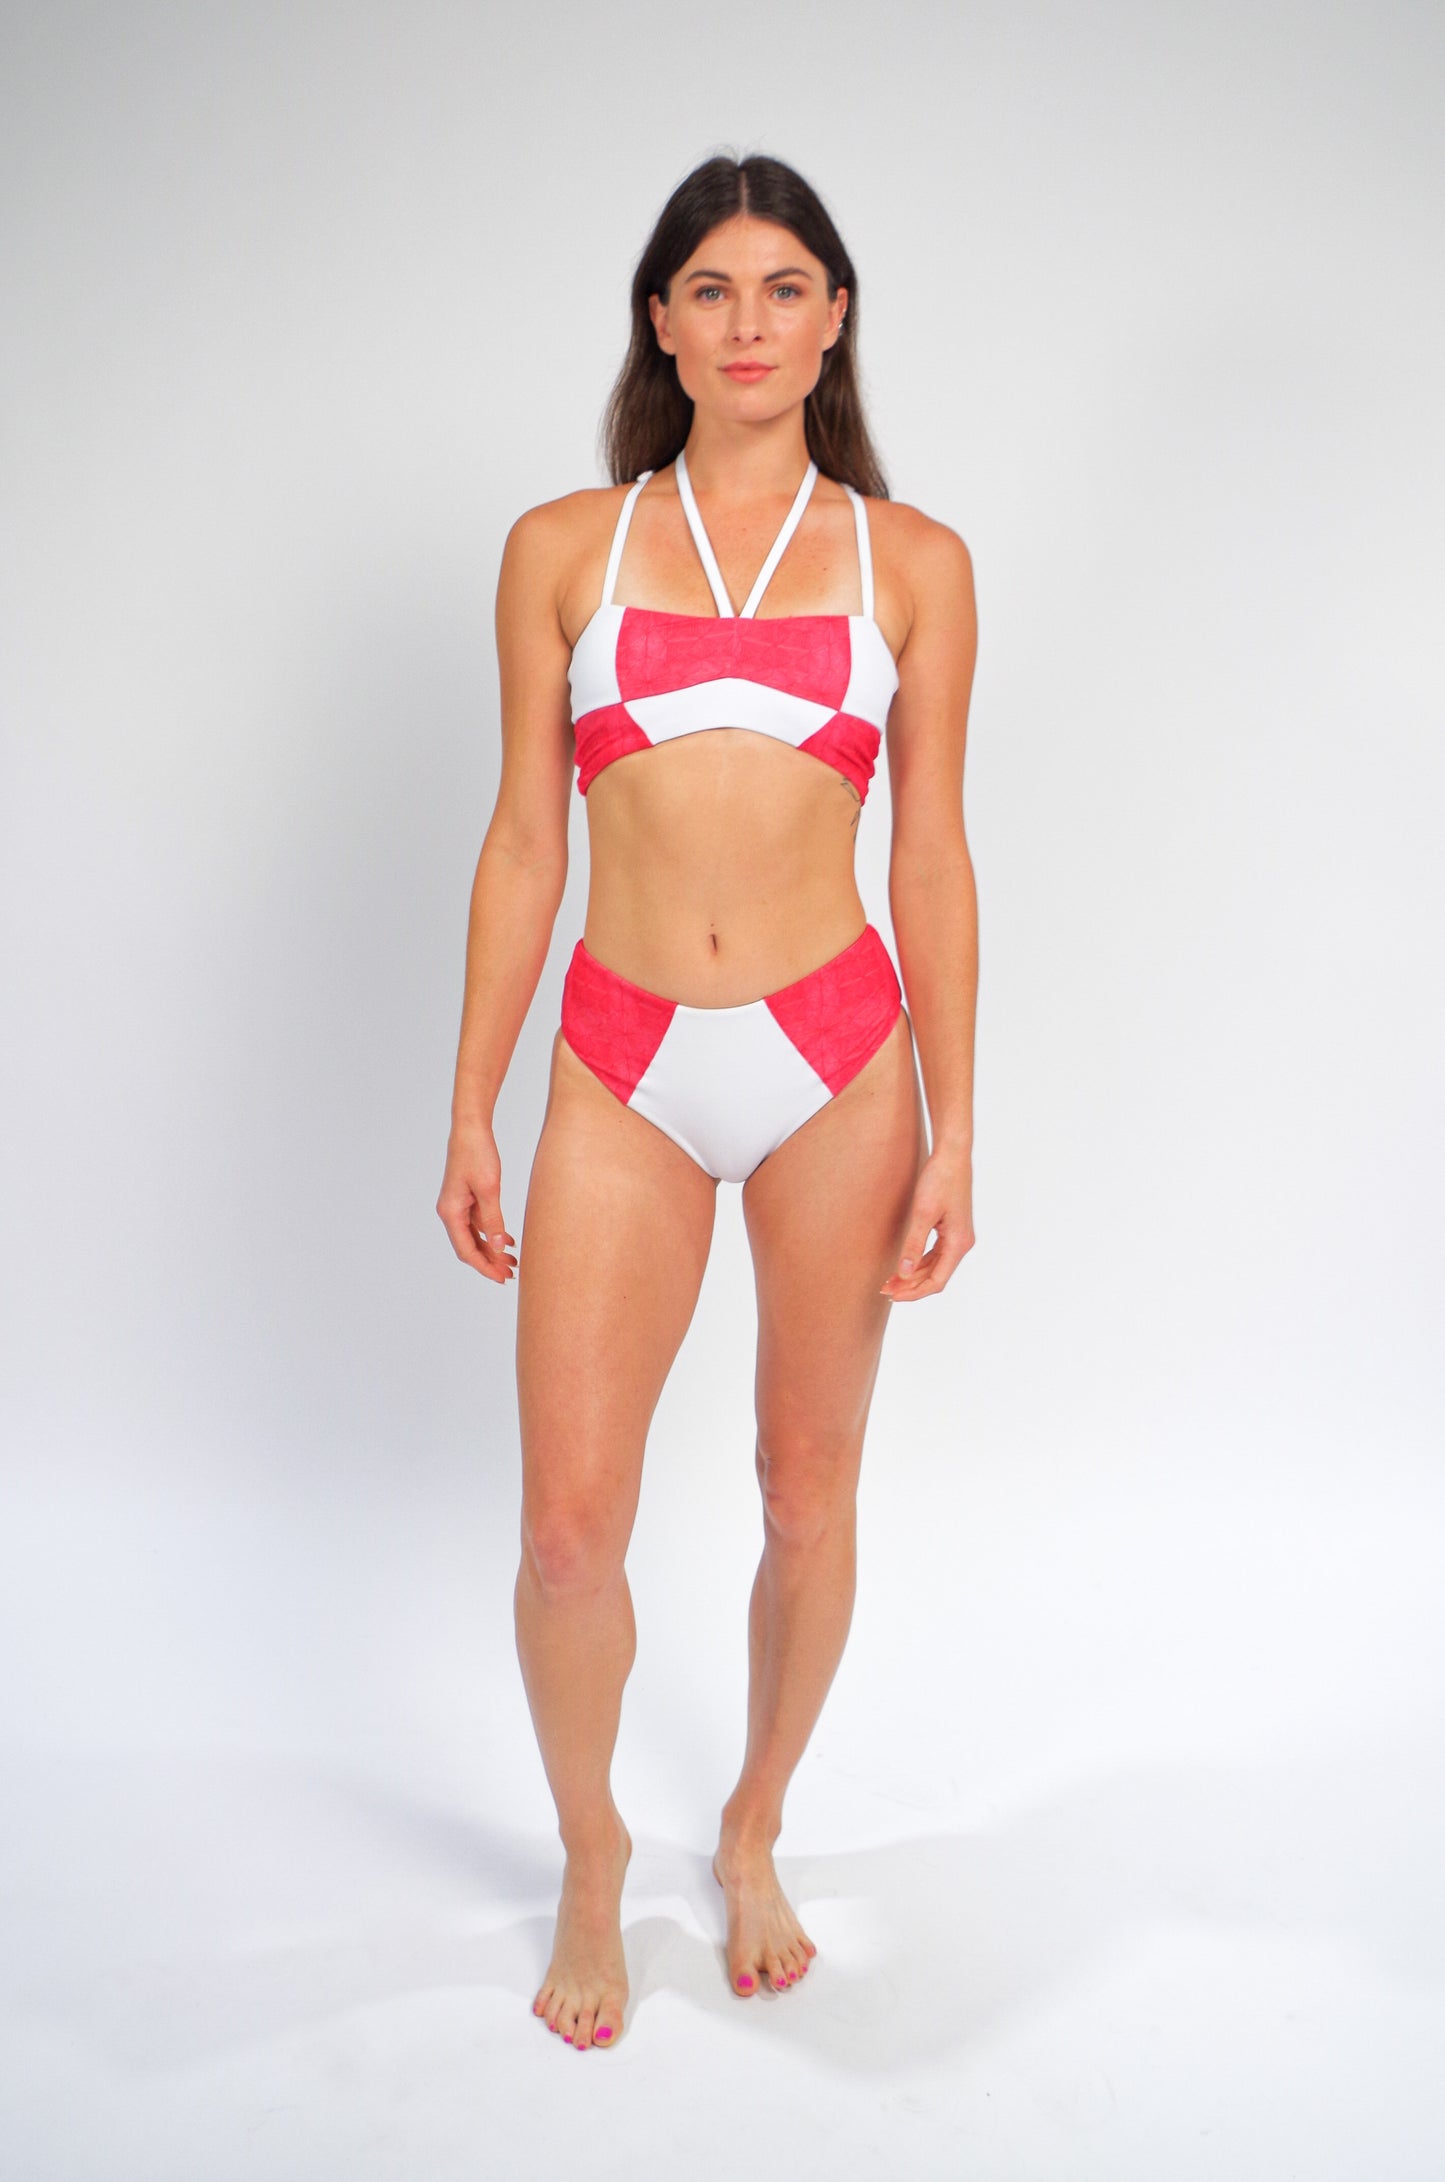 Massi bikini bottom with color-blocked tile pattern